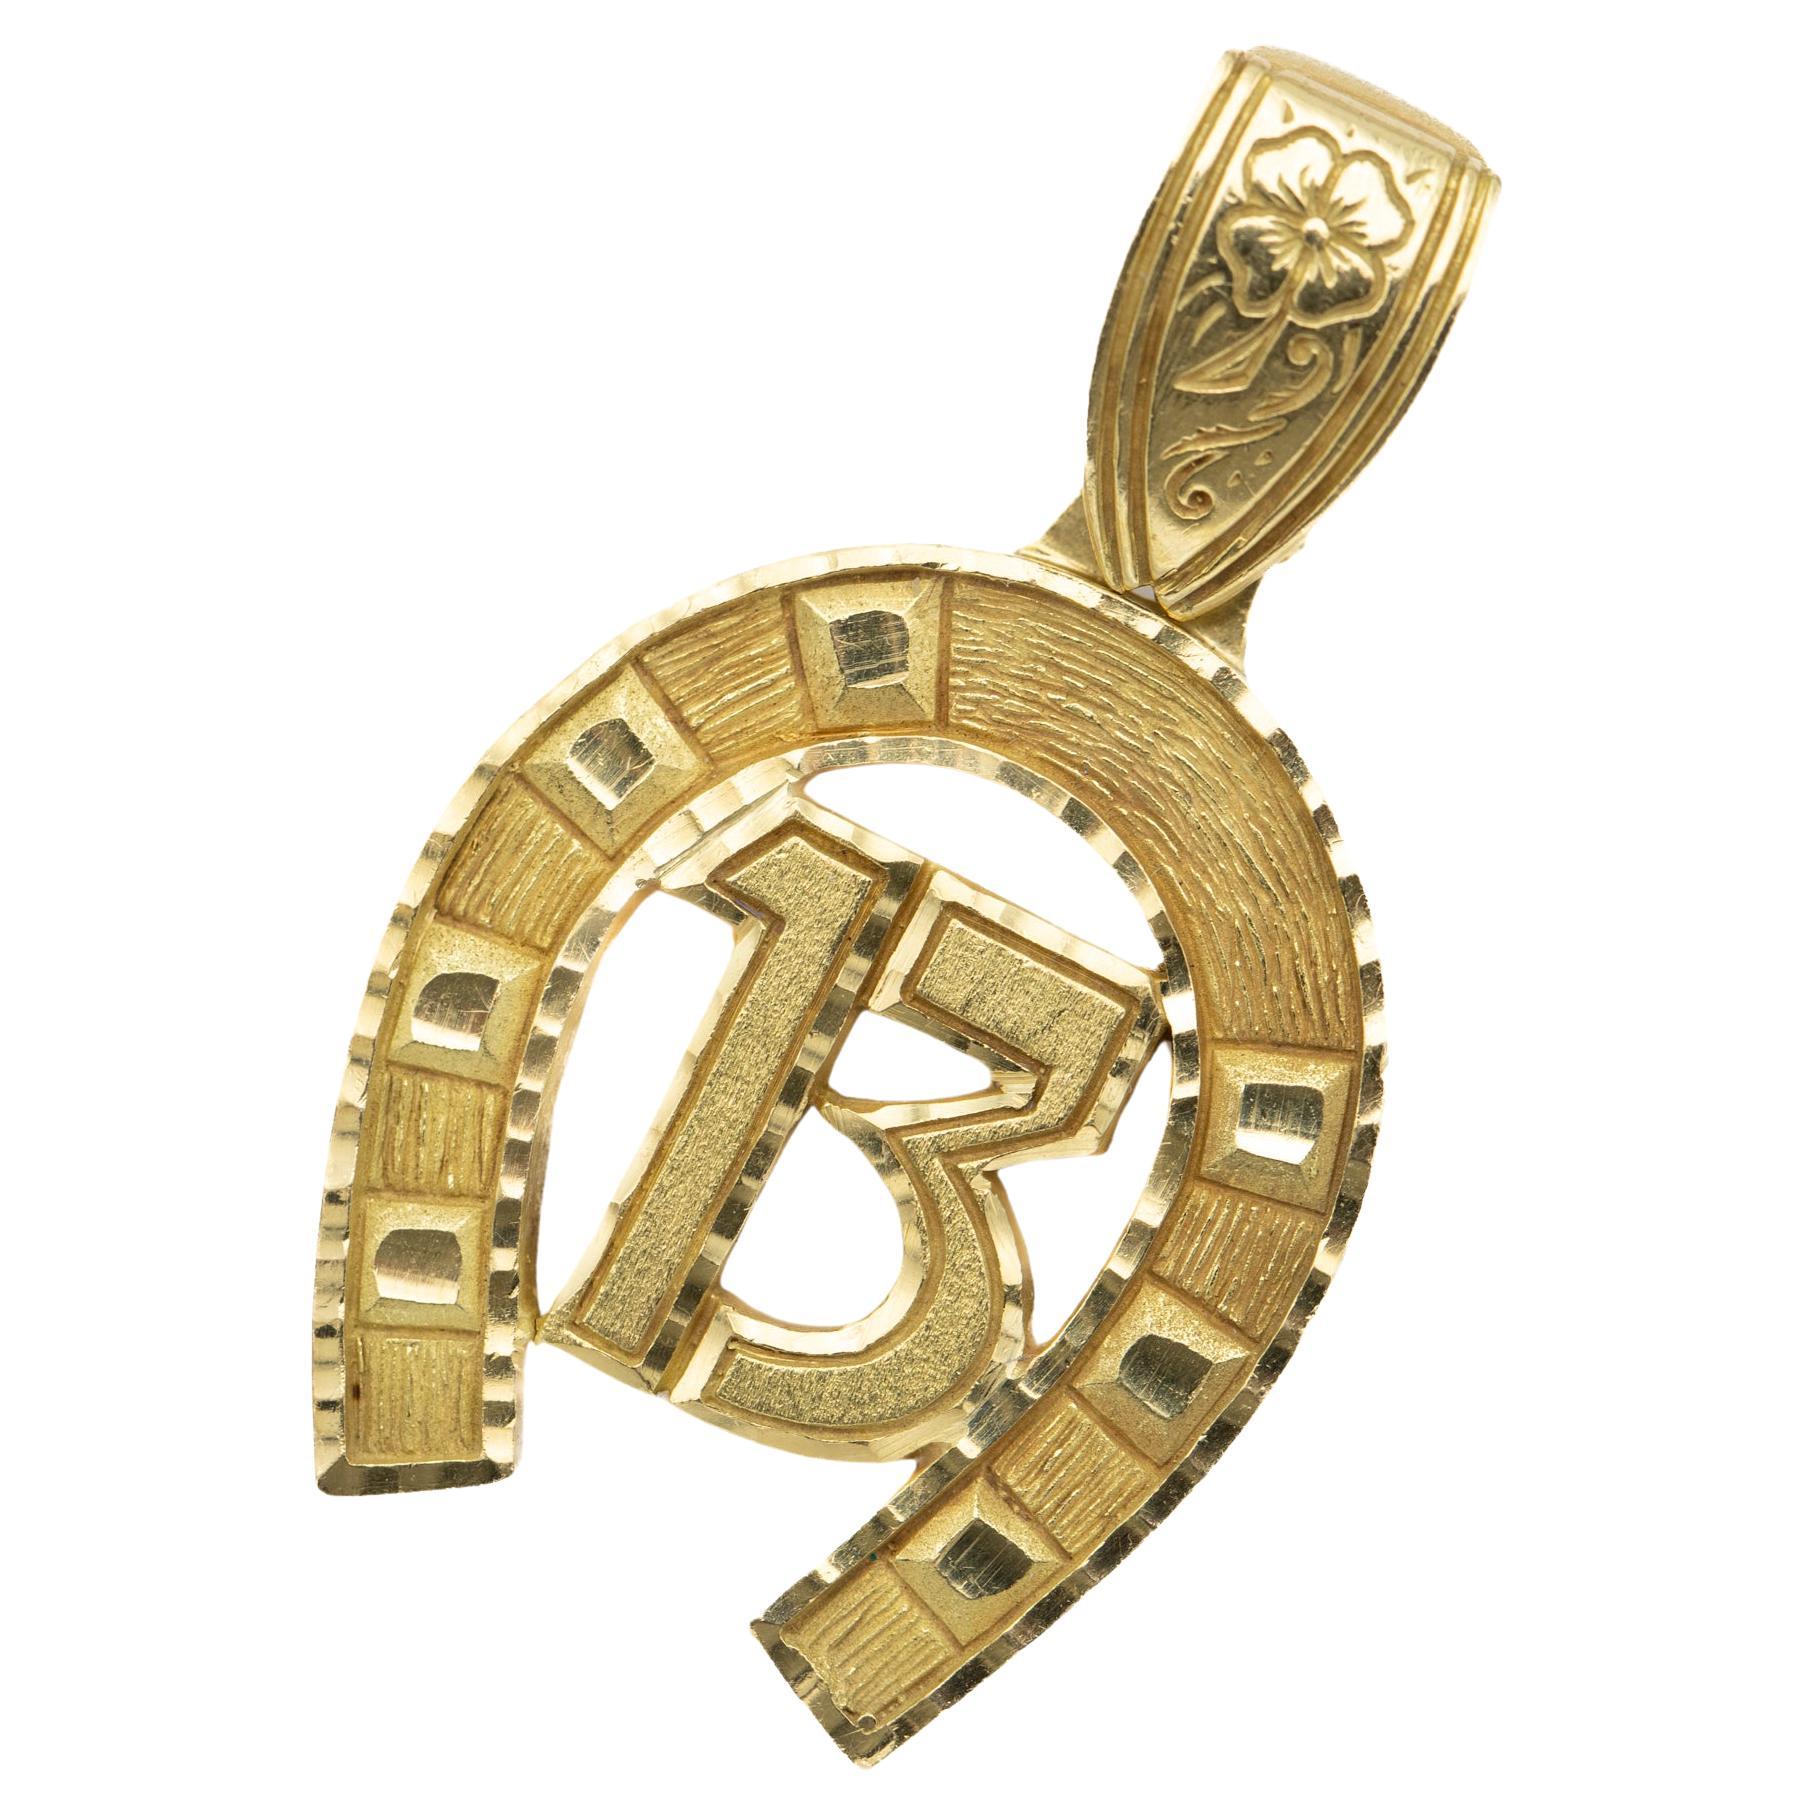 18k solid gold - XL 13 - large heavy good luck charm, vintage horse shoe pendant